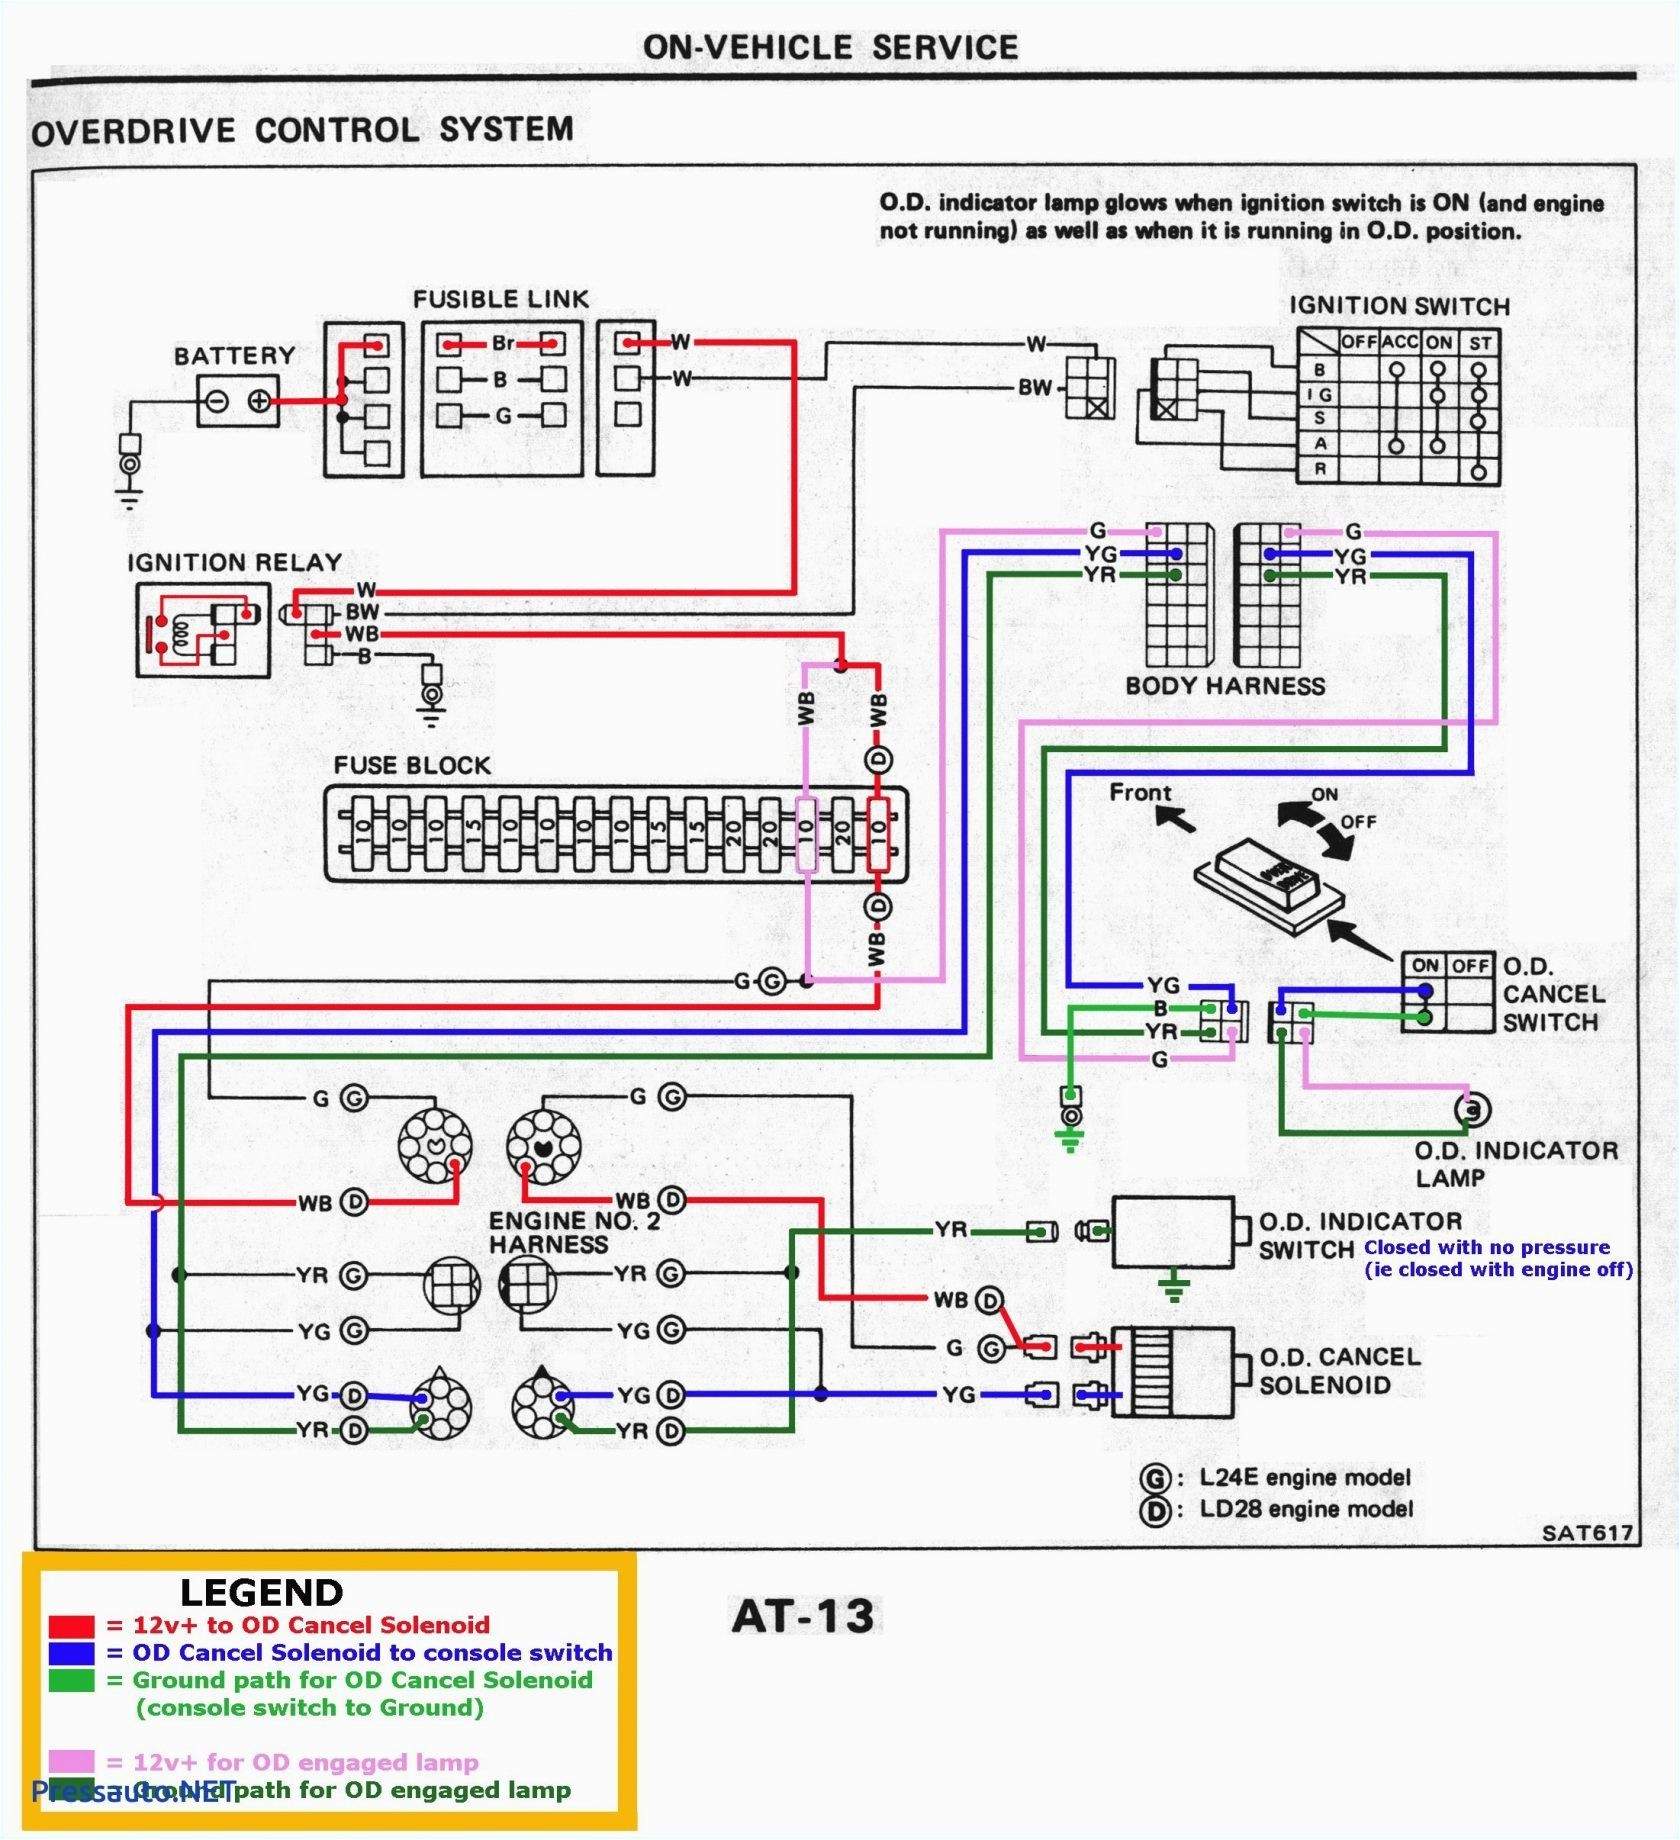 wiring diagram figure manual e book figure 15 air conditioner electrical schematic diagram